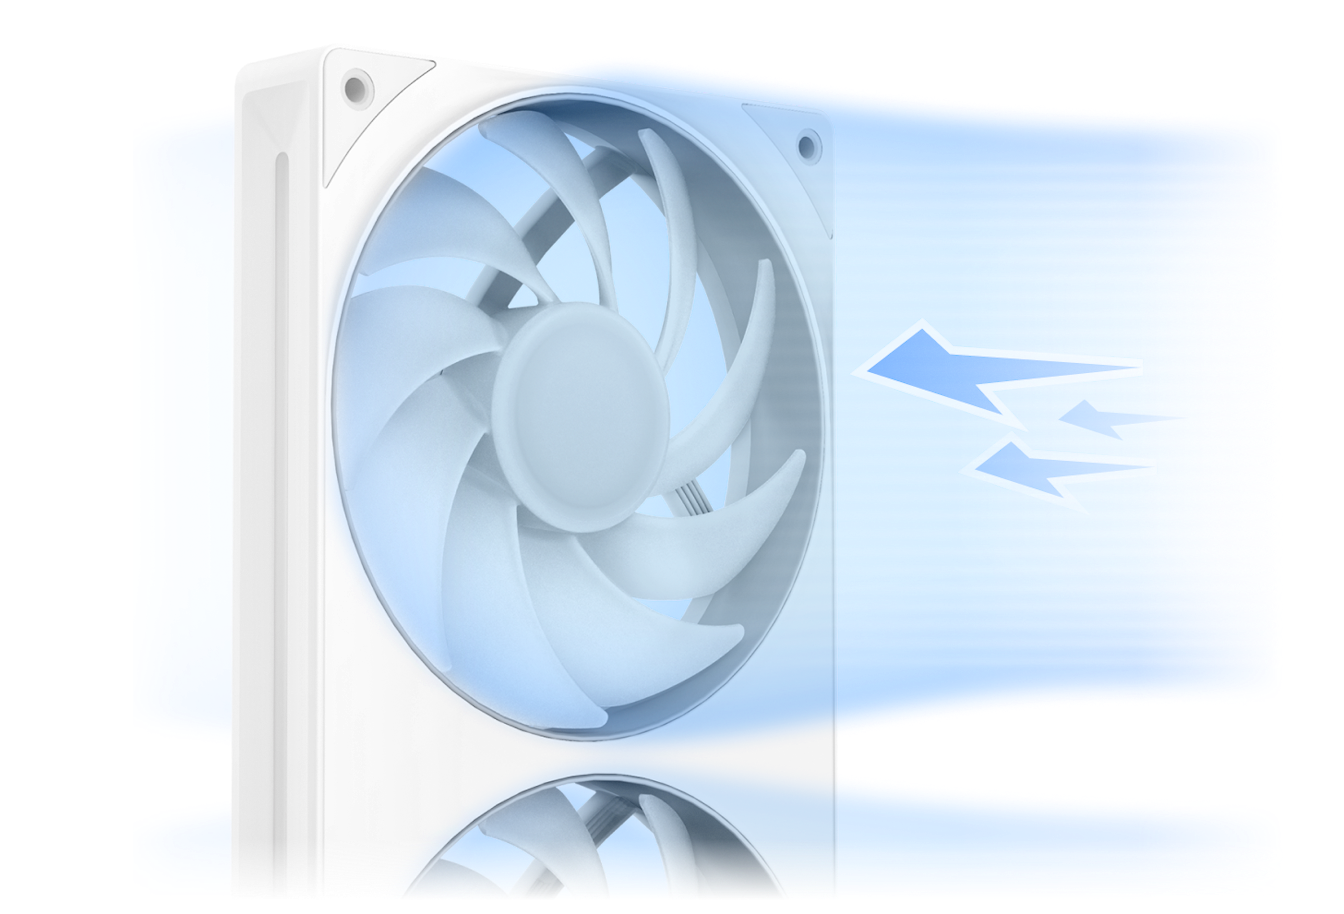 White RGB Core Single Frame Fan with airflow diagram